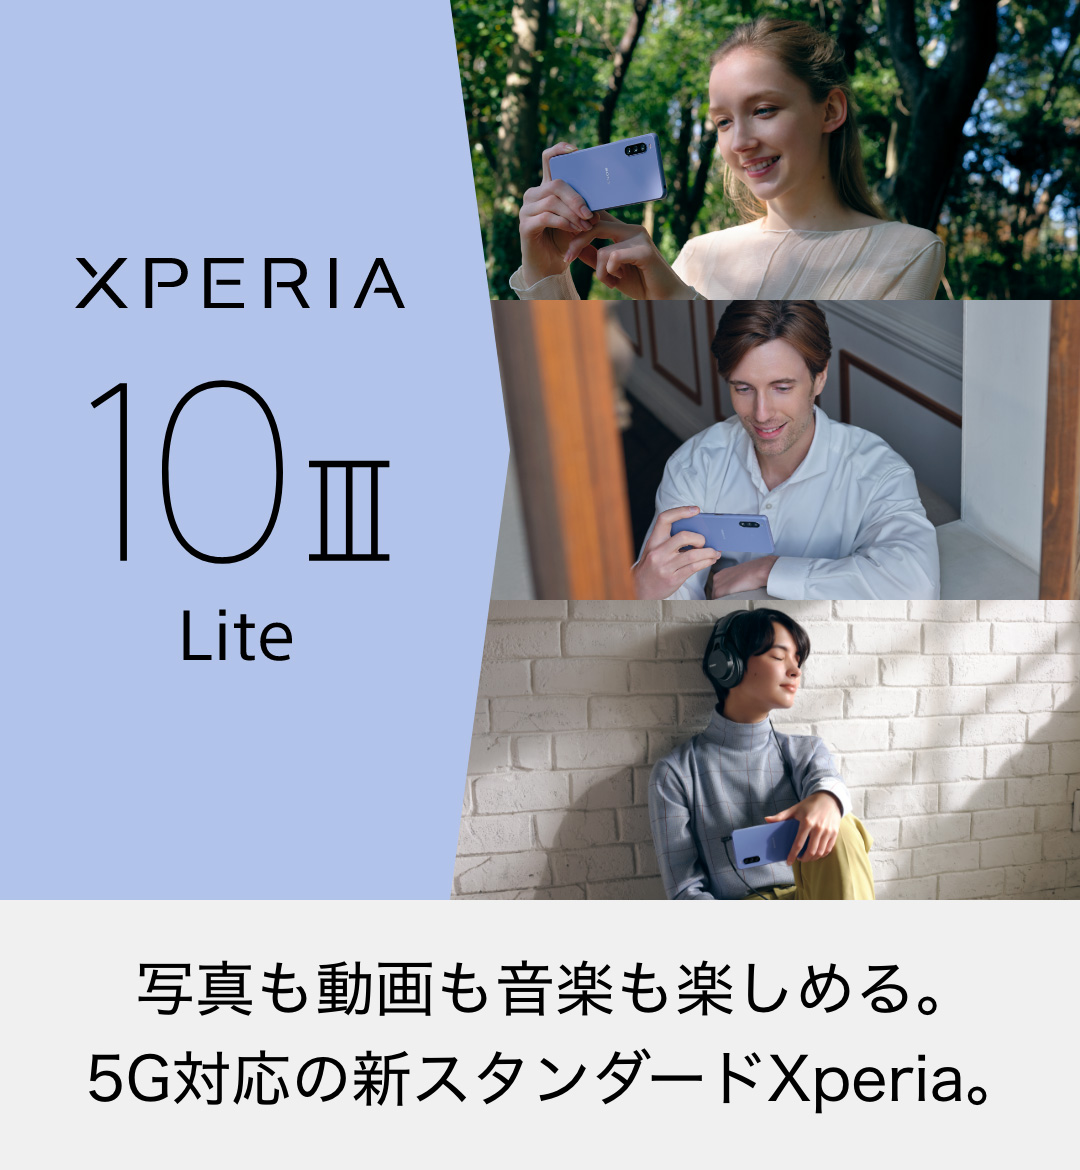 Xperia 10 III Lite スペシャルサイト | Xperia (エクスペリア ...